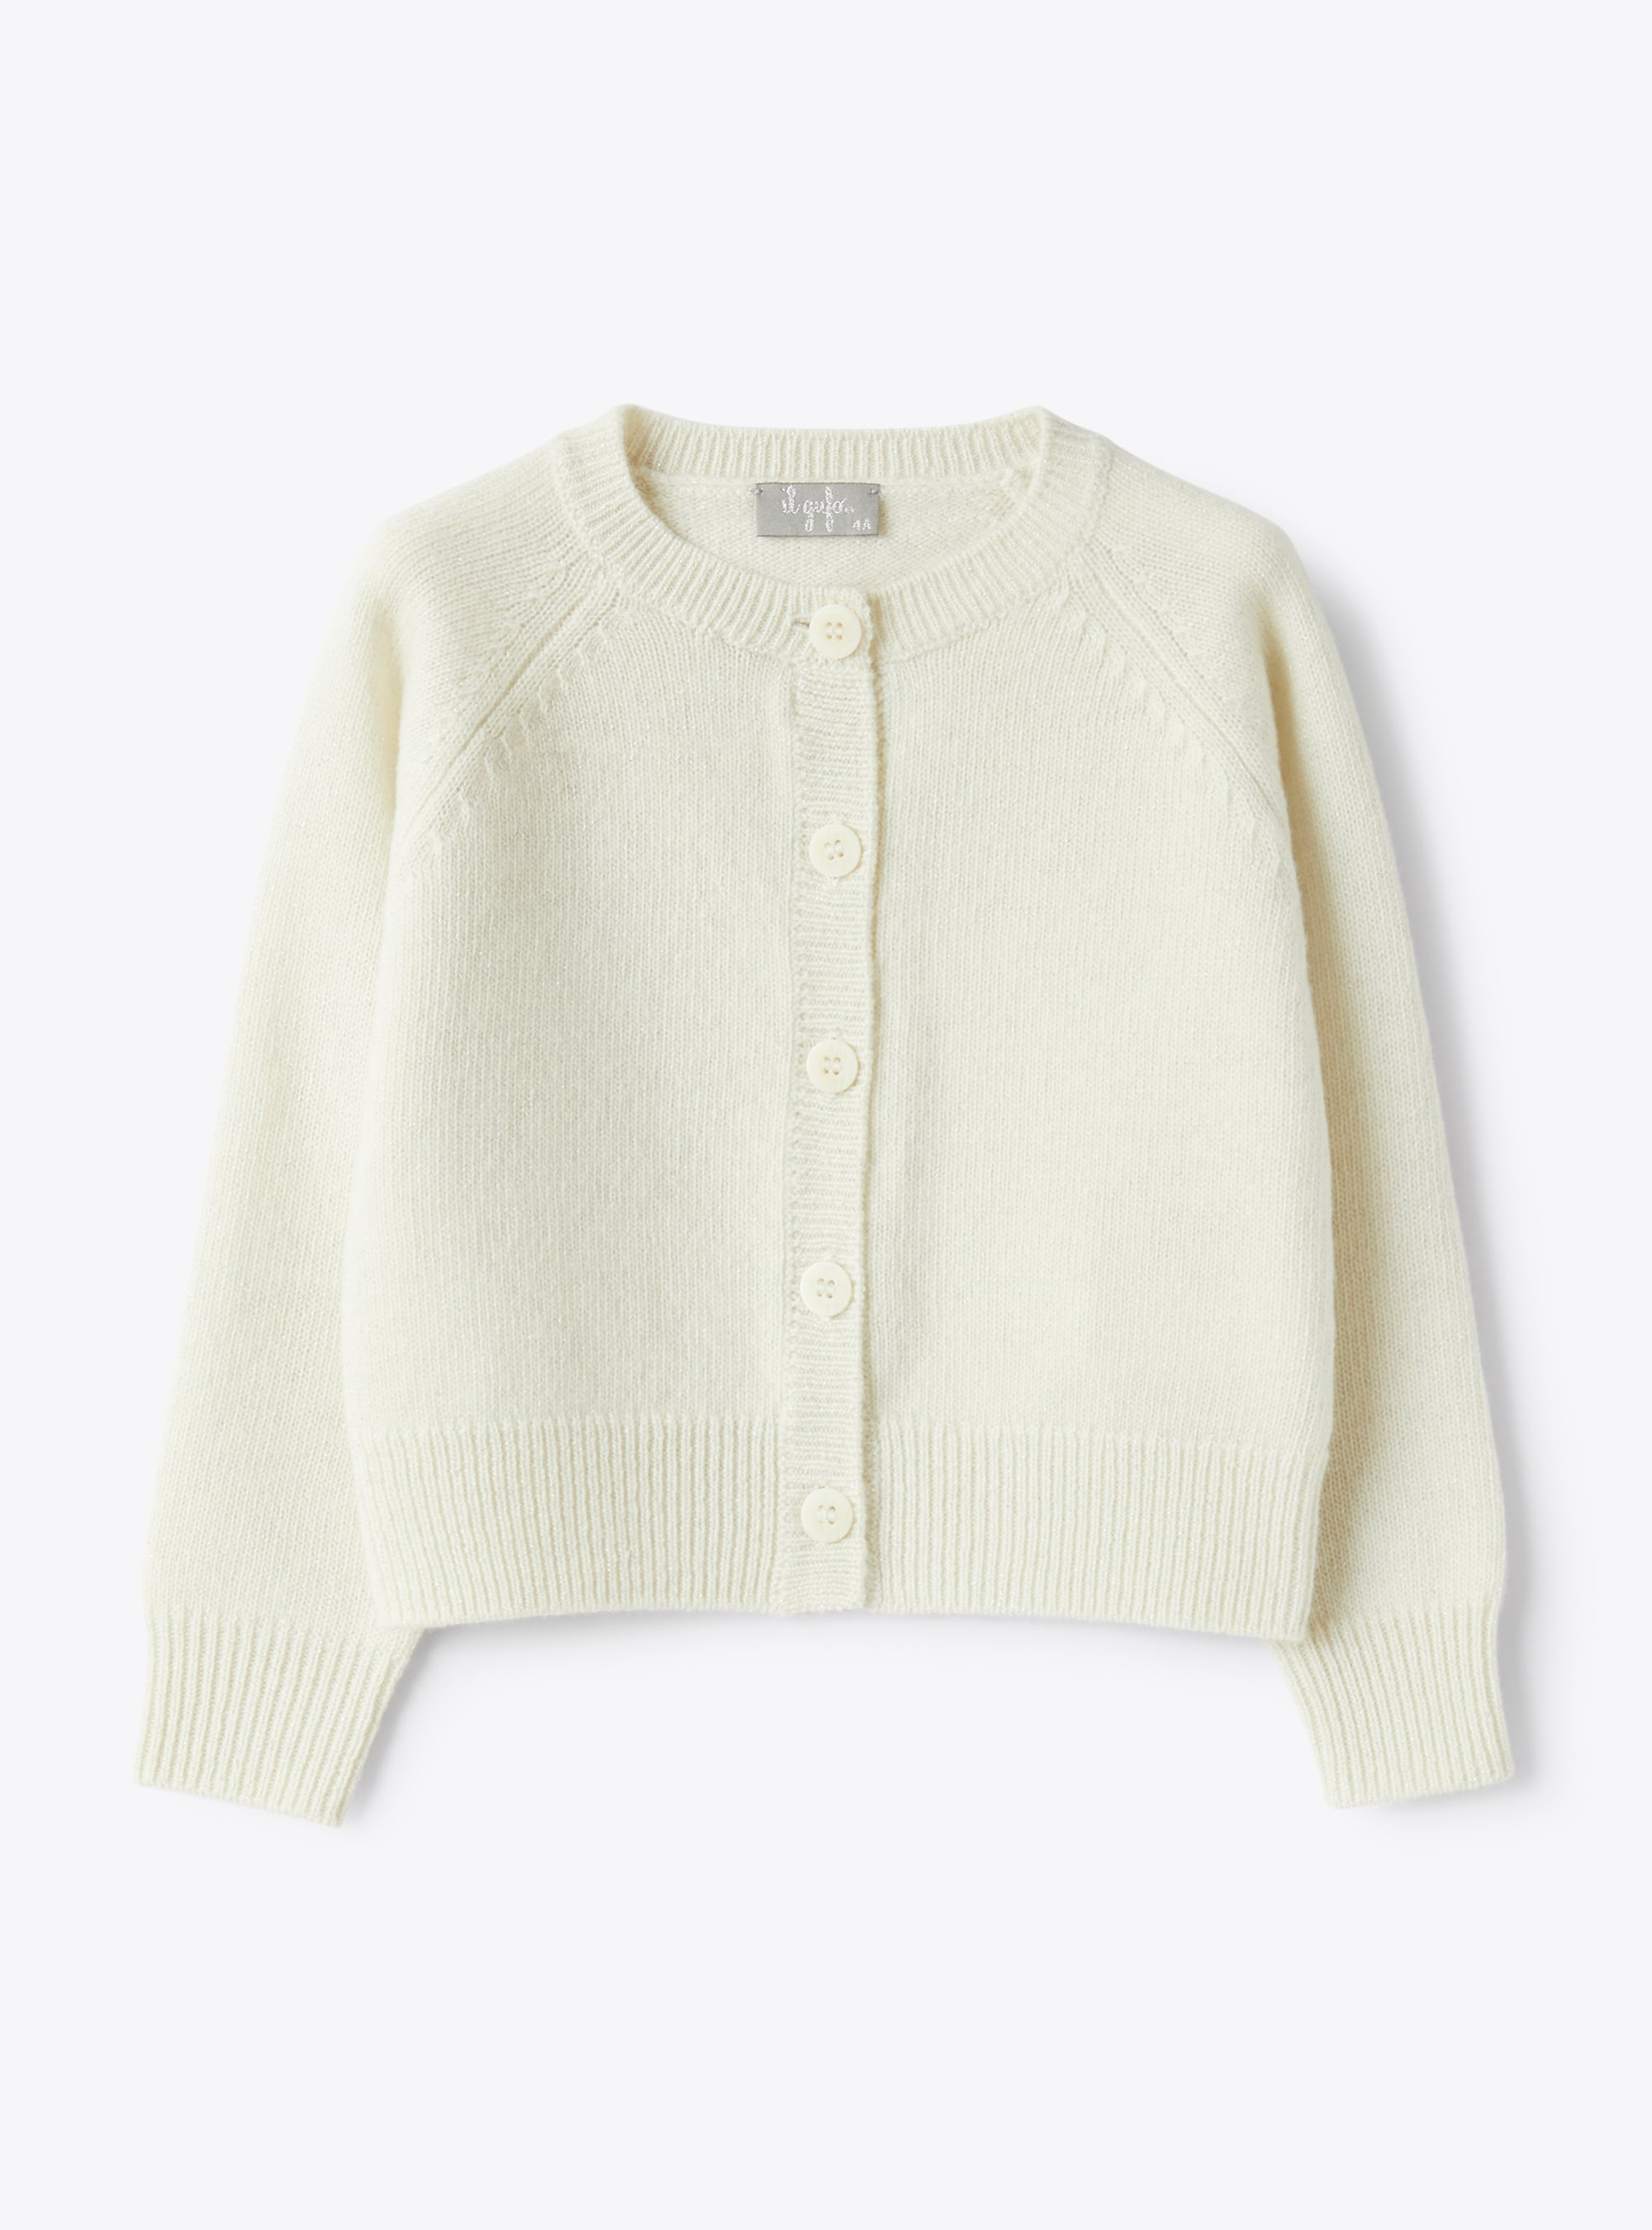 Cardigan in milk-white lurex wool - Sweaters - Il Gufo